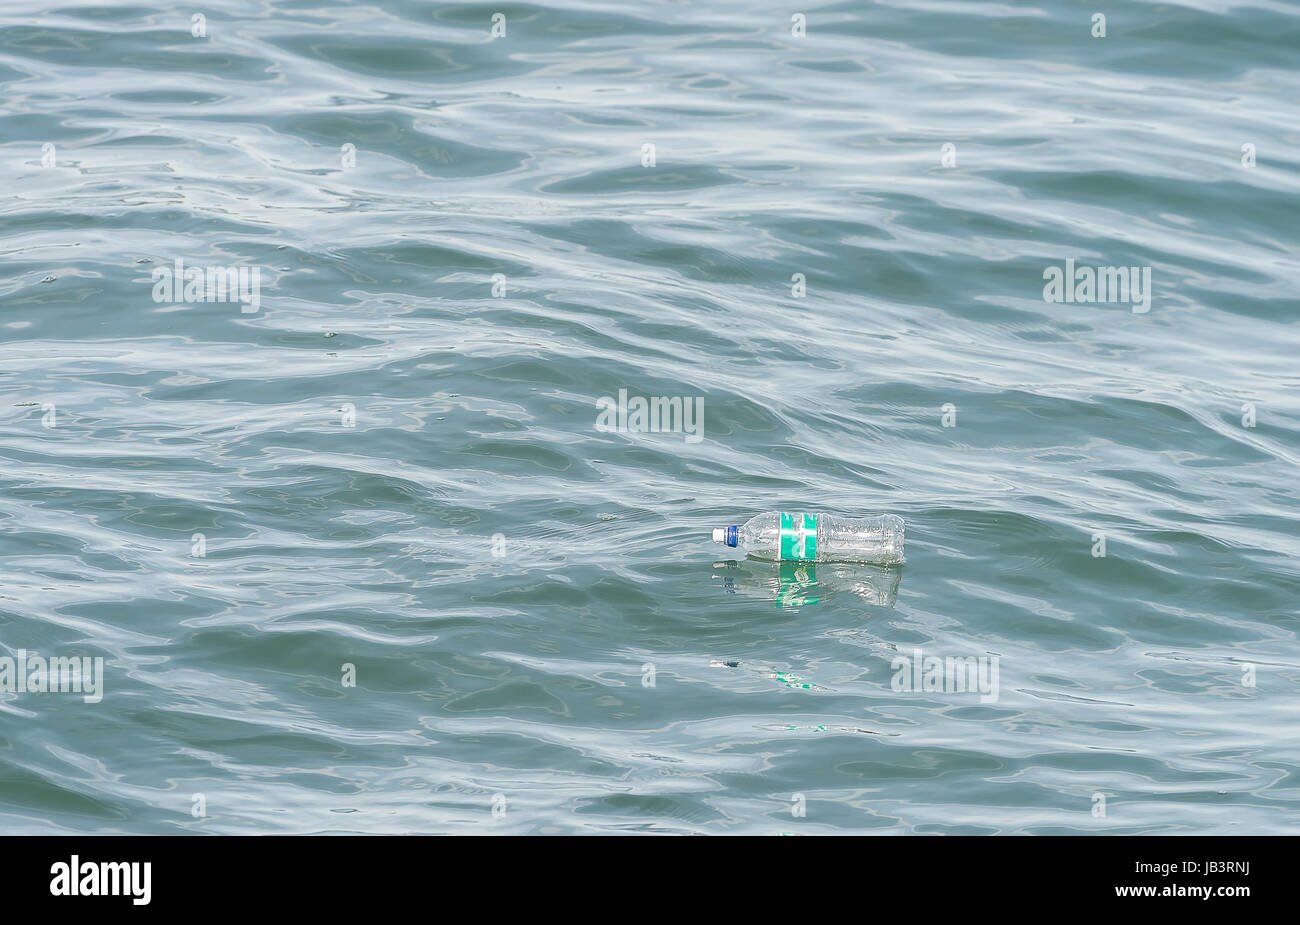 Bottle in the ocean, Plastic pollution in ocean Stock Photo